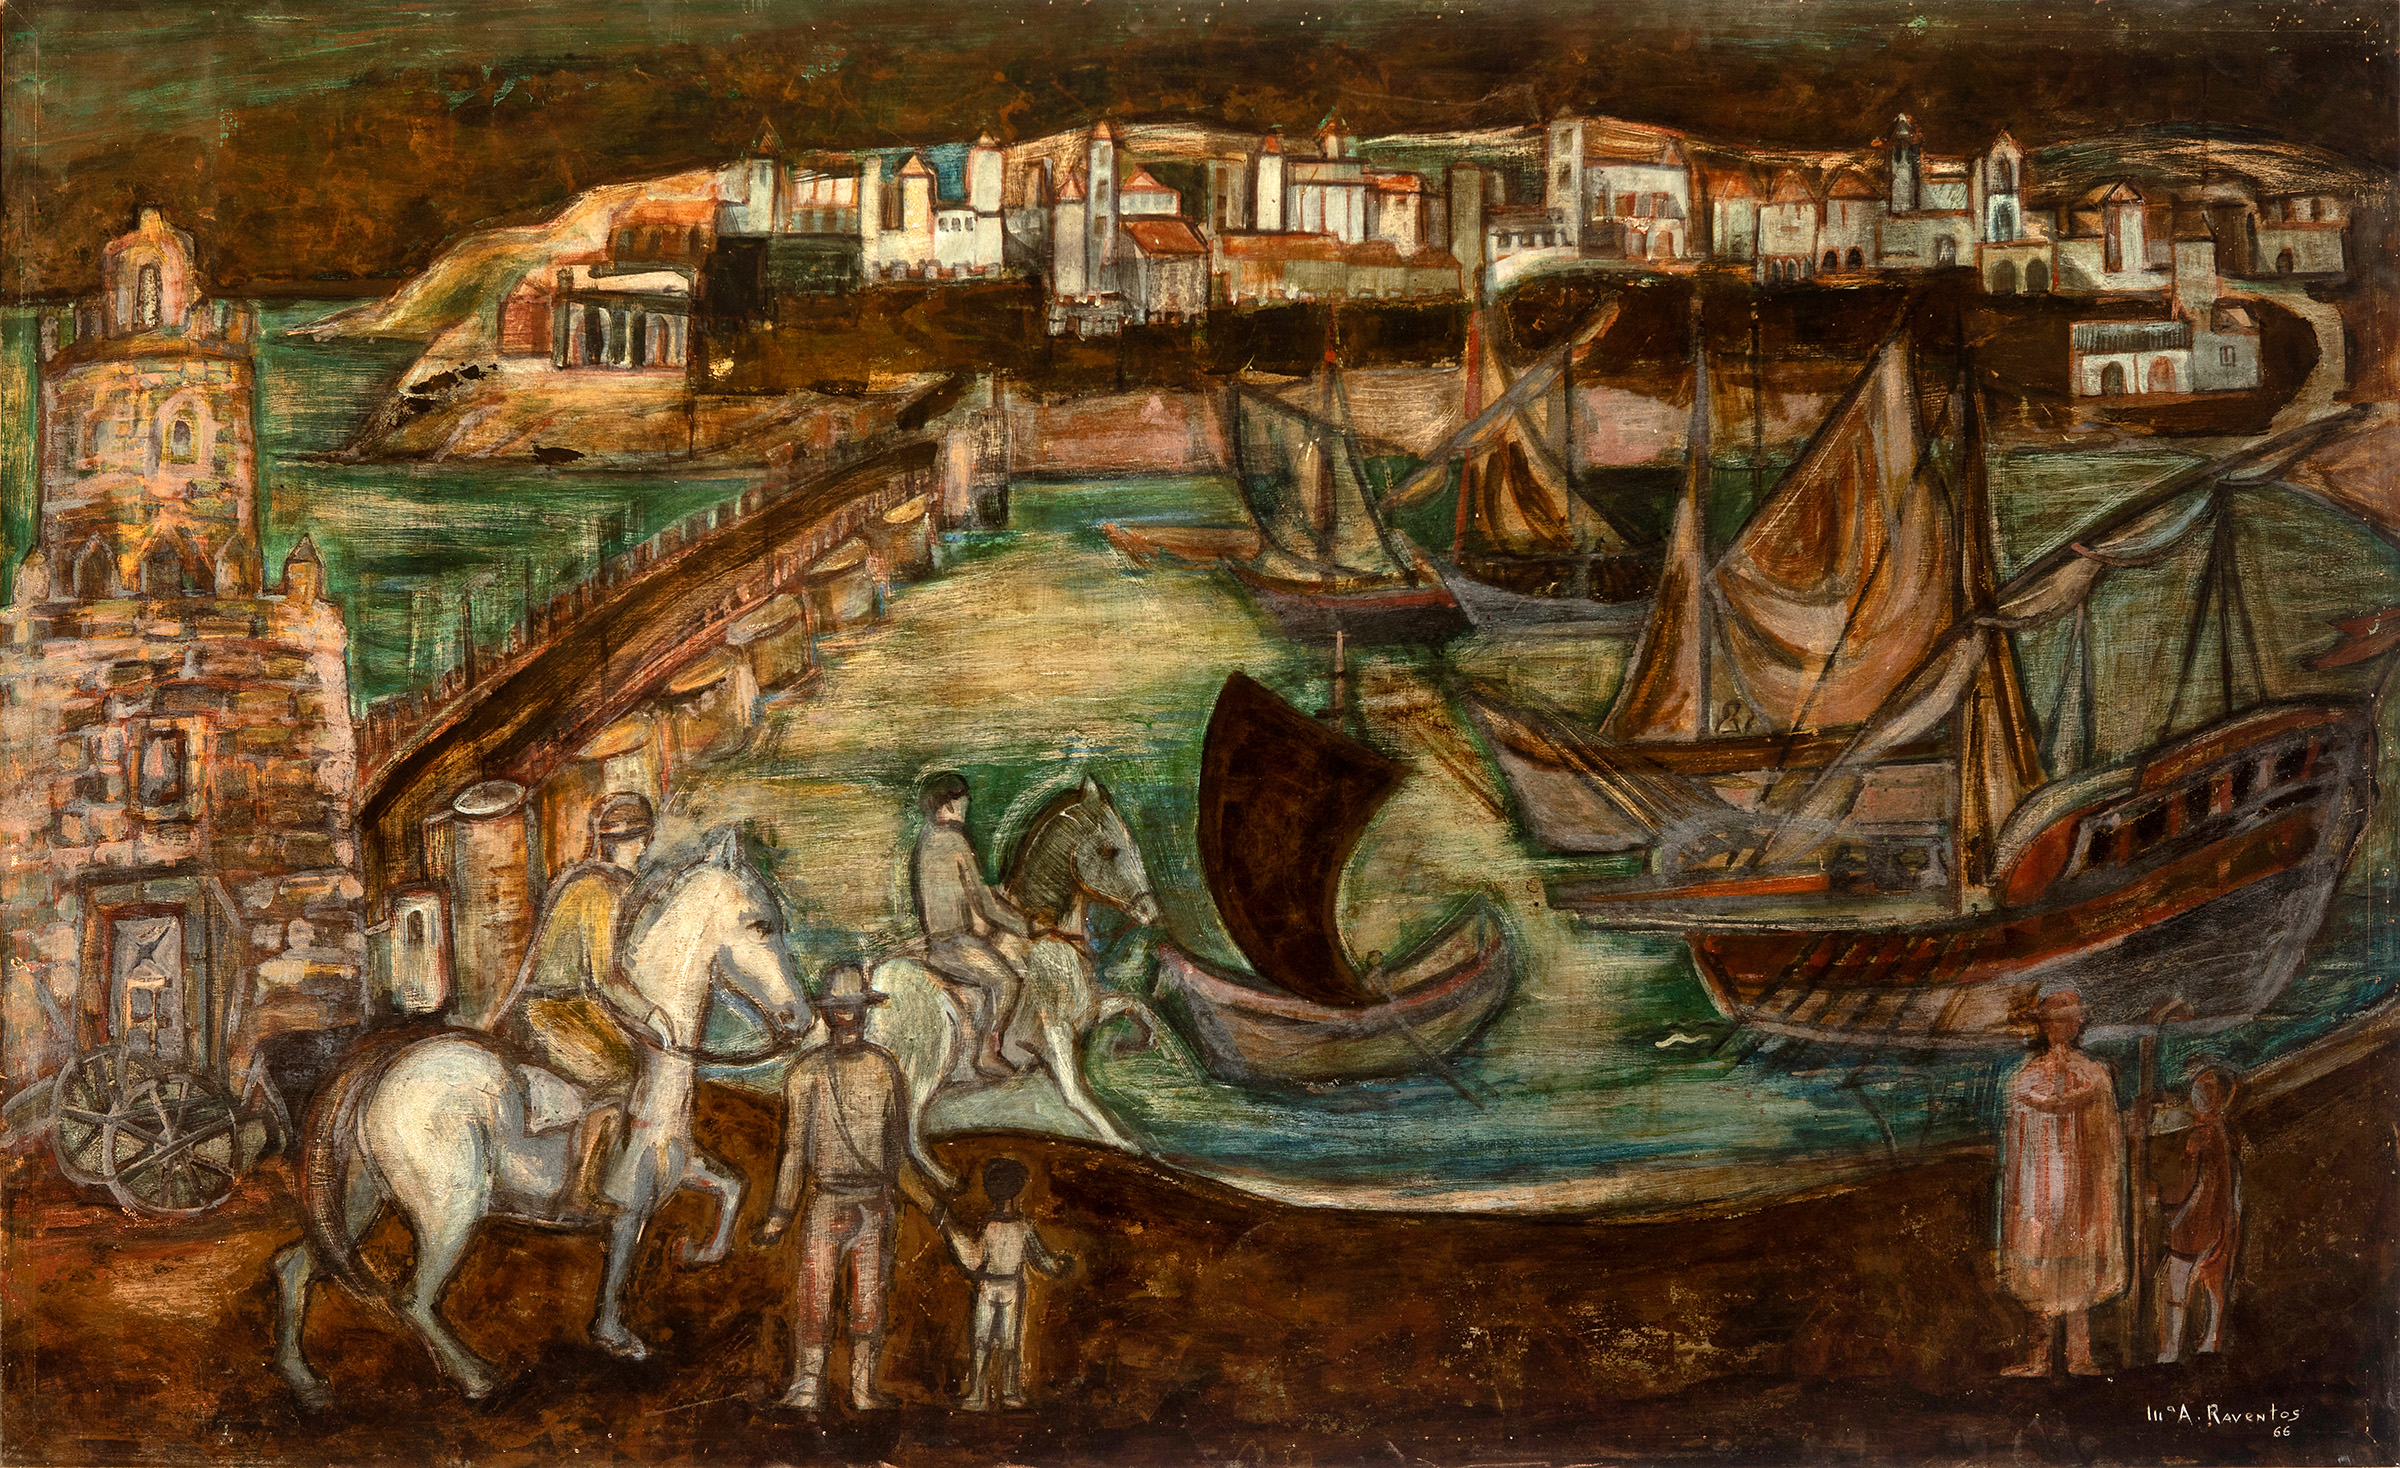 MARIA ASSUMPCIÓ RAVENTÓS I TORRAS (Sant Sadurní d'Anoia, Barcelona, 1930).Untitled, 1966.Oil on